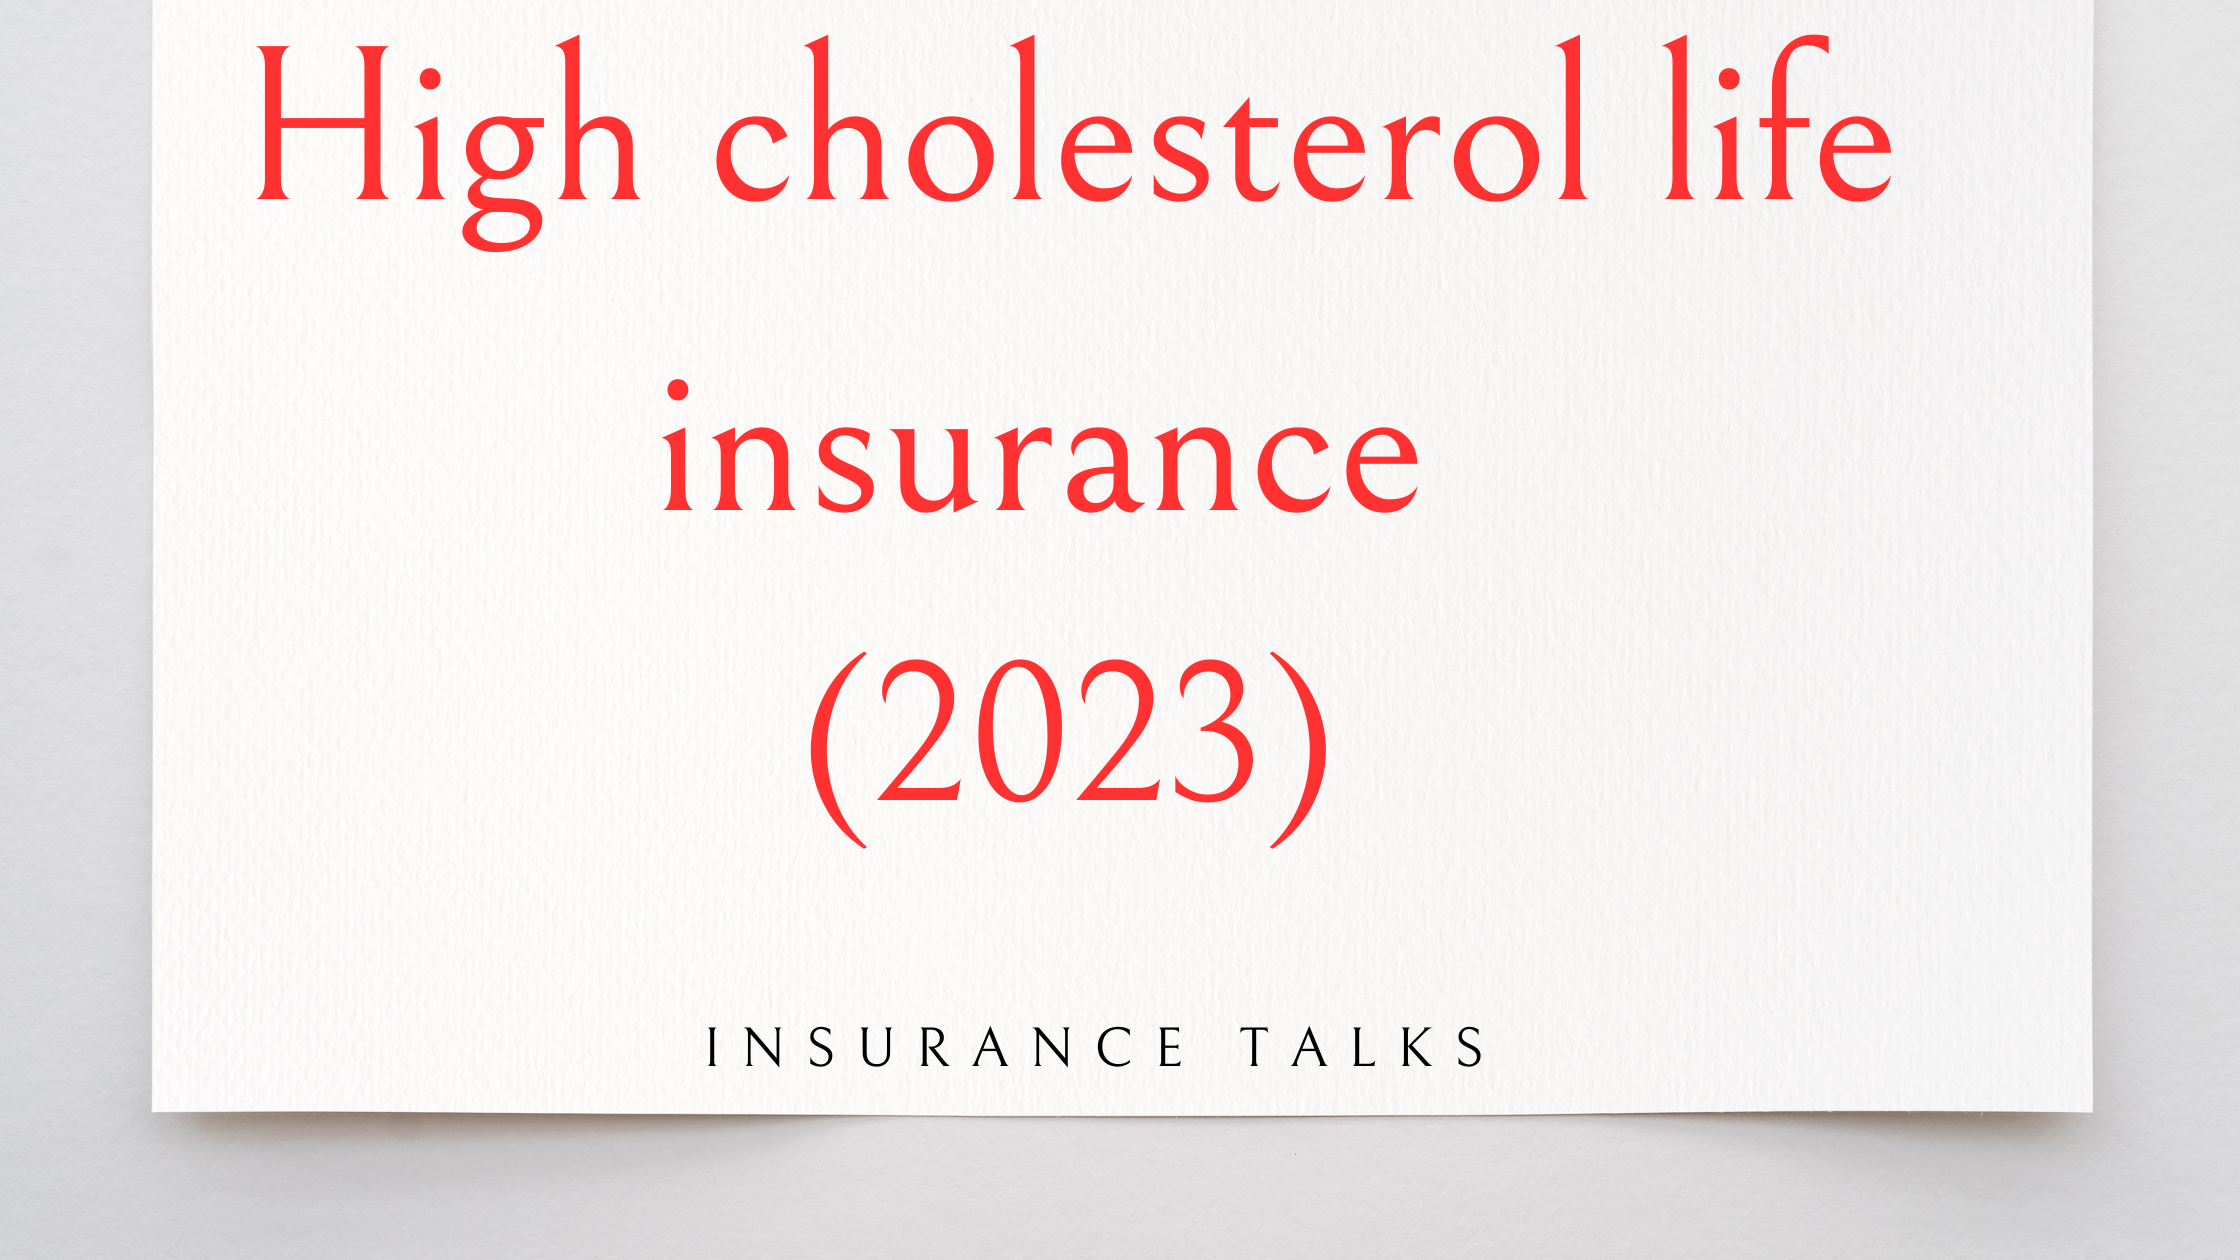 High cholesterol life insurance (2023)